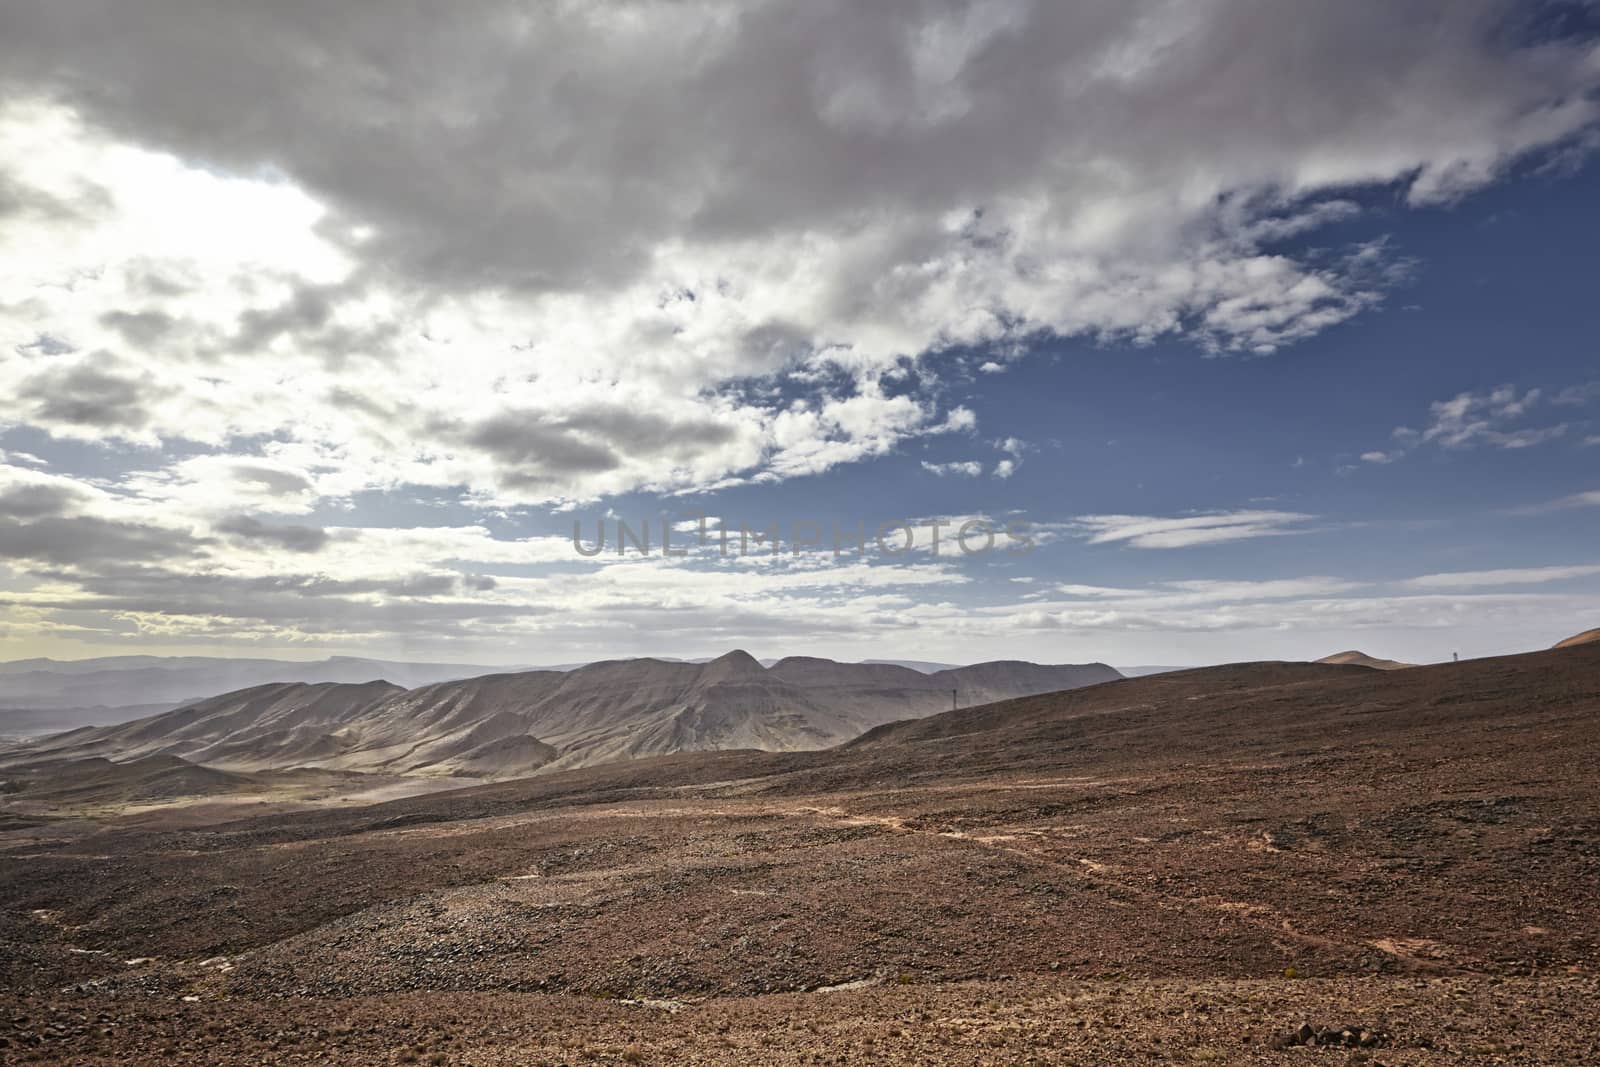 Desert mountain scenery. Moroccan desert scenic landscape by Tjeerdkruse